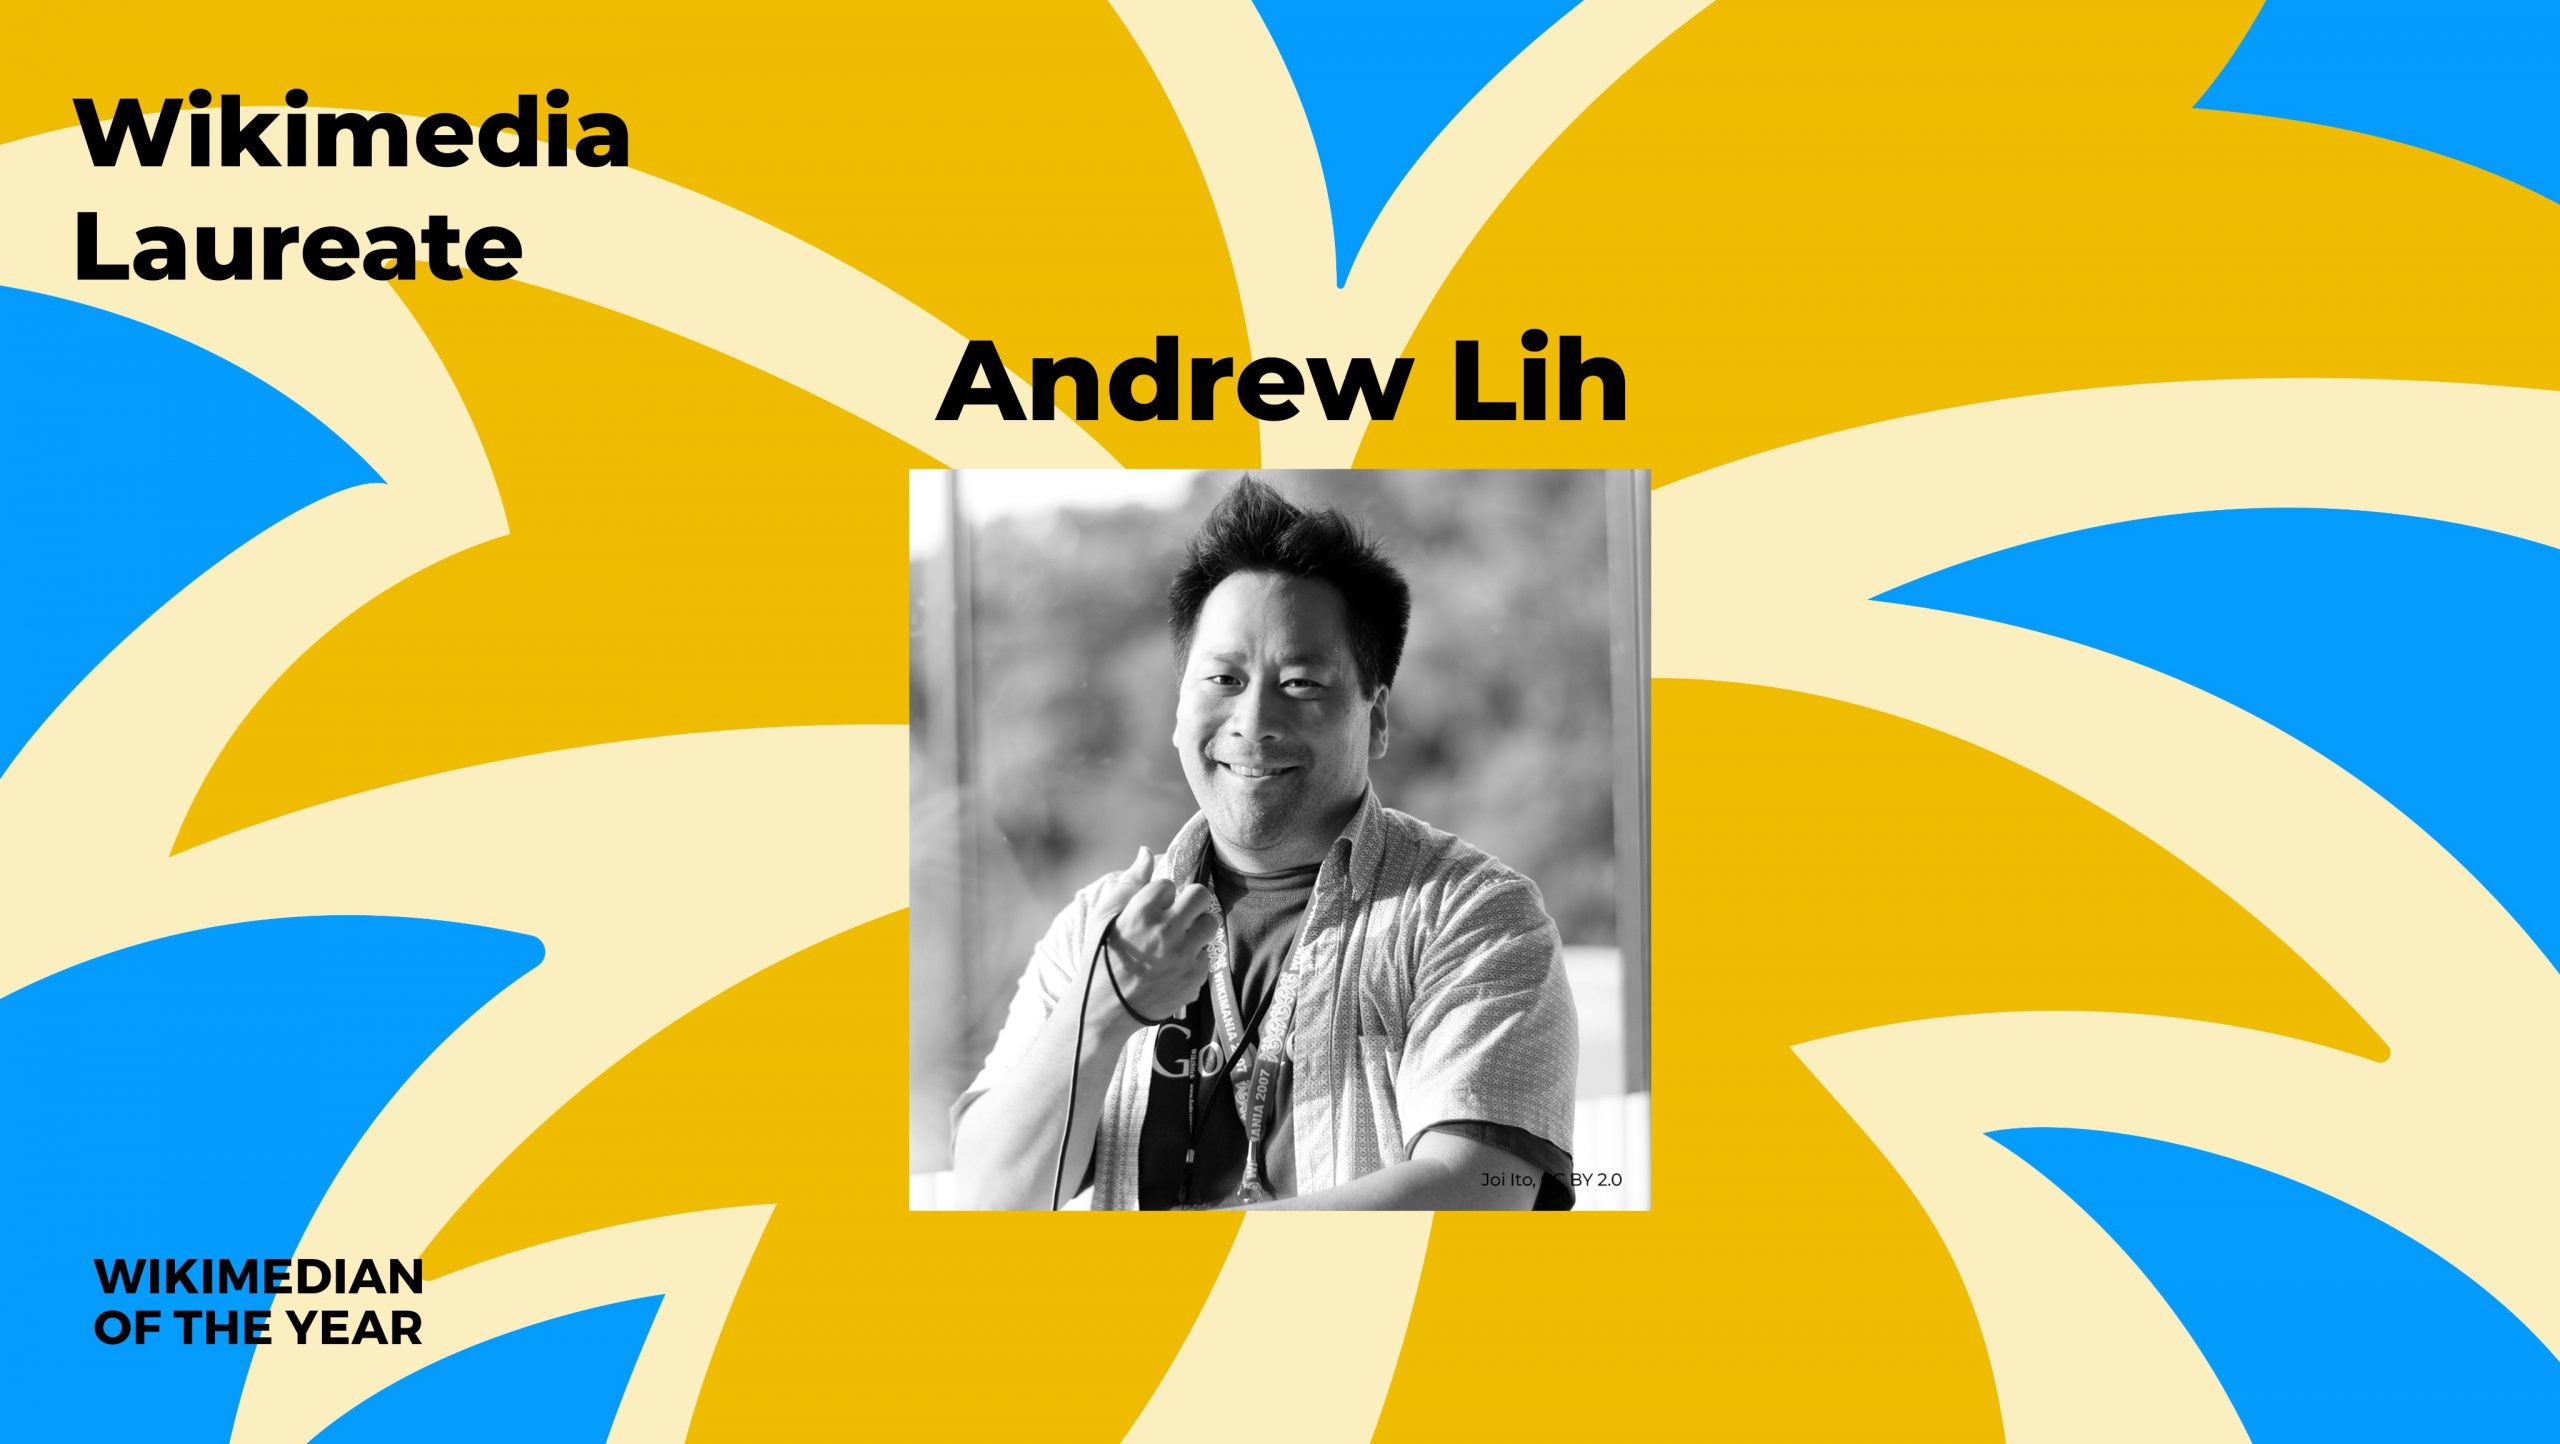 Wikimania 2022 Wikimedia Laureate Andrew Lih